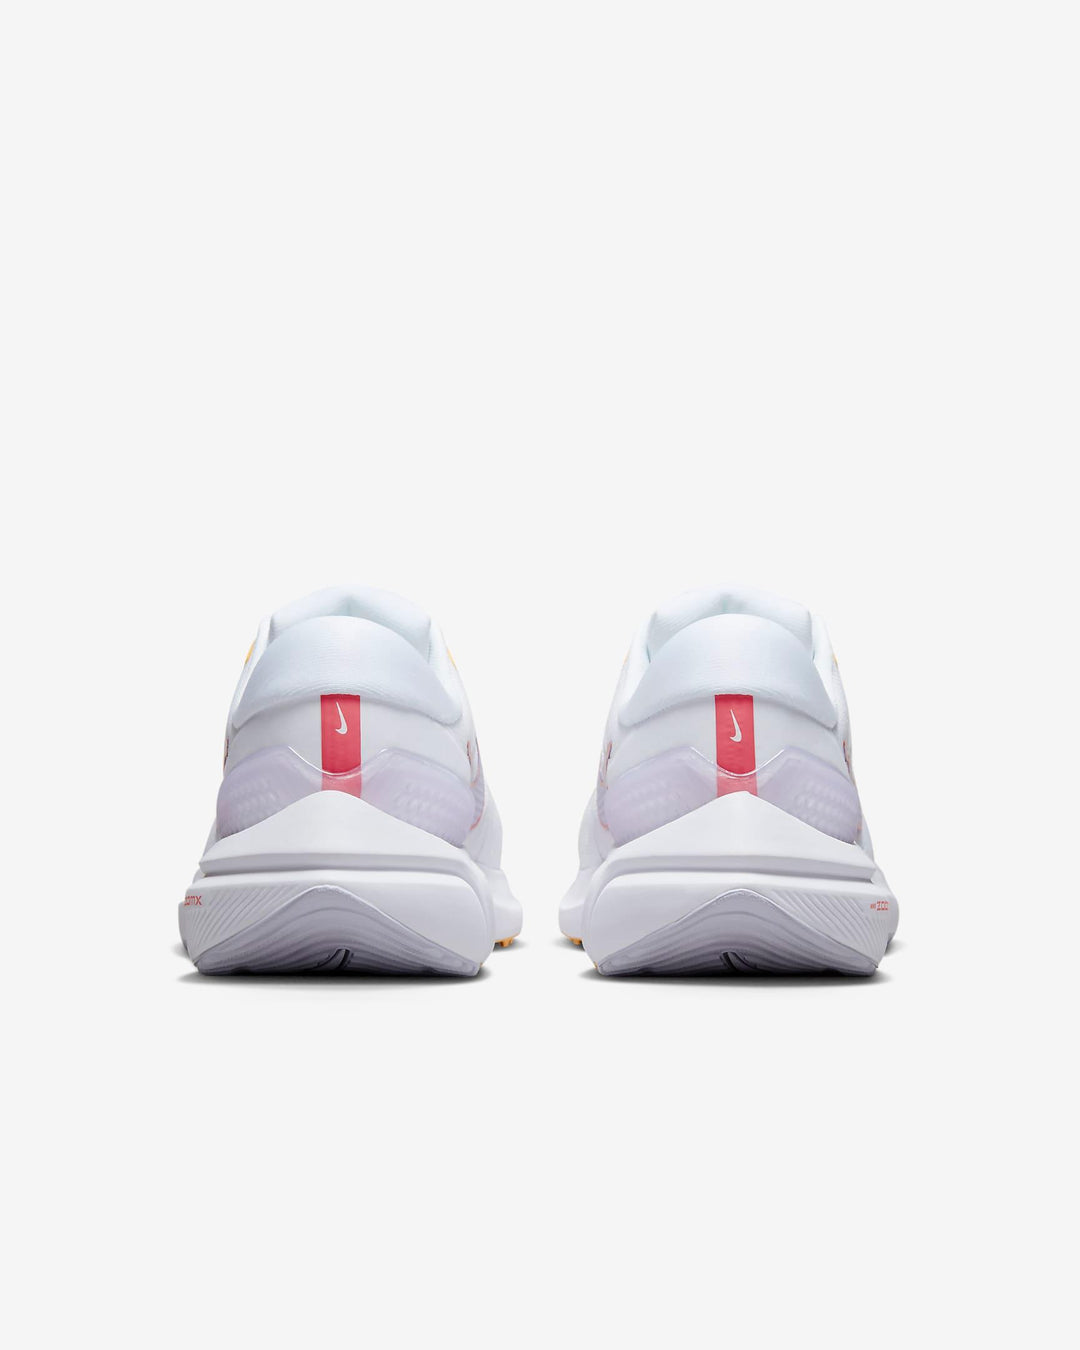 Giày Nike Vomero 16 Women Road Running Shoes #White - Kallos Vietnam